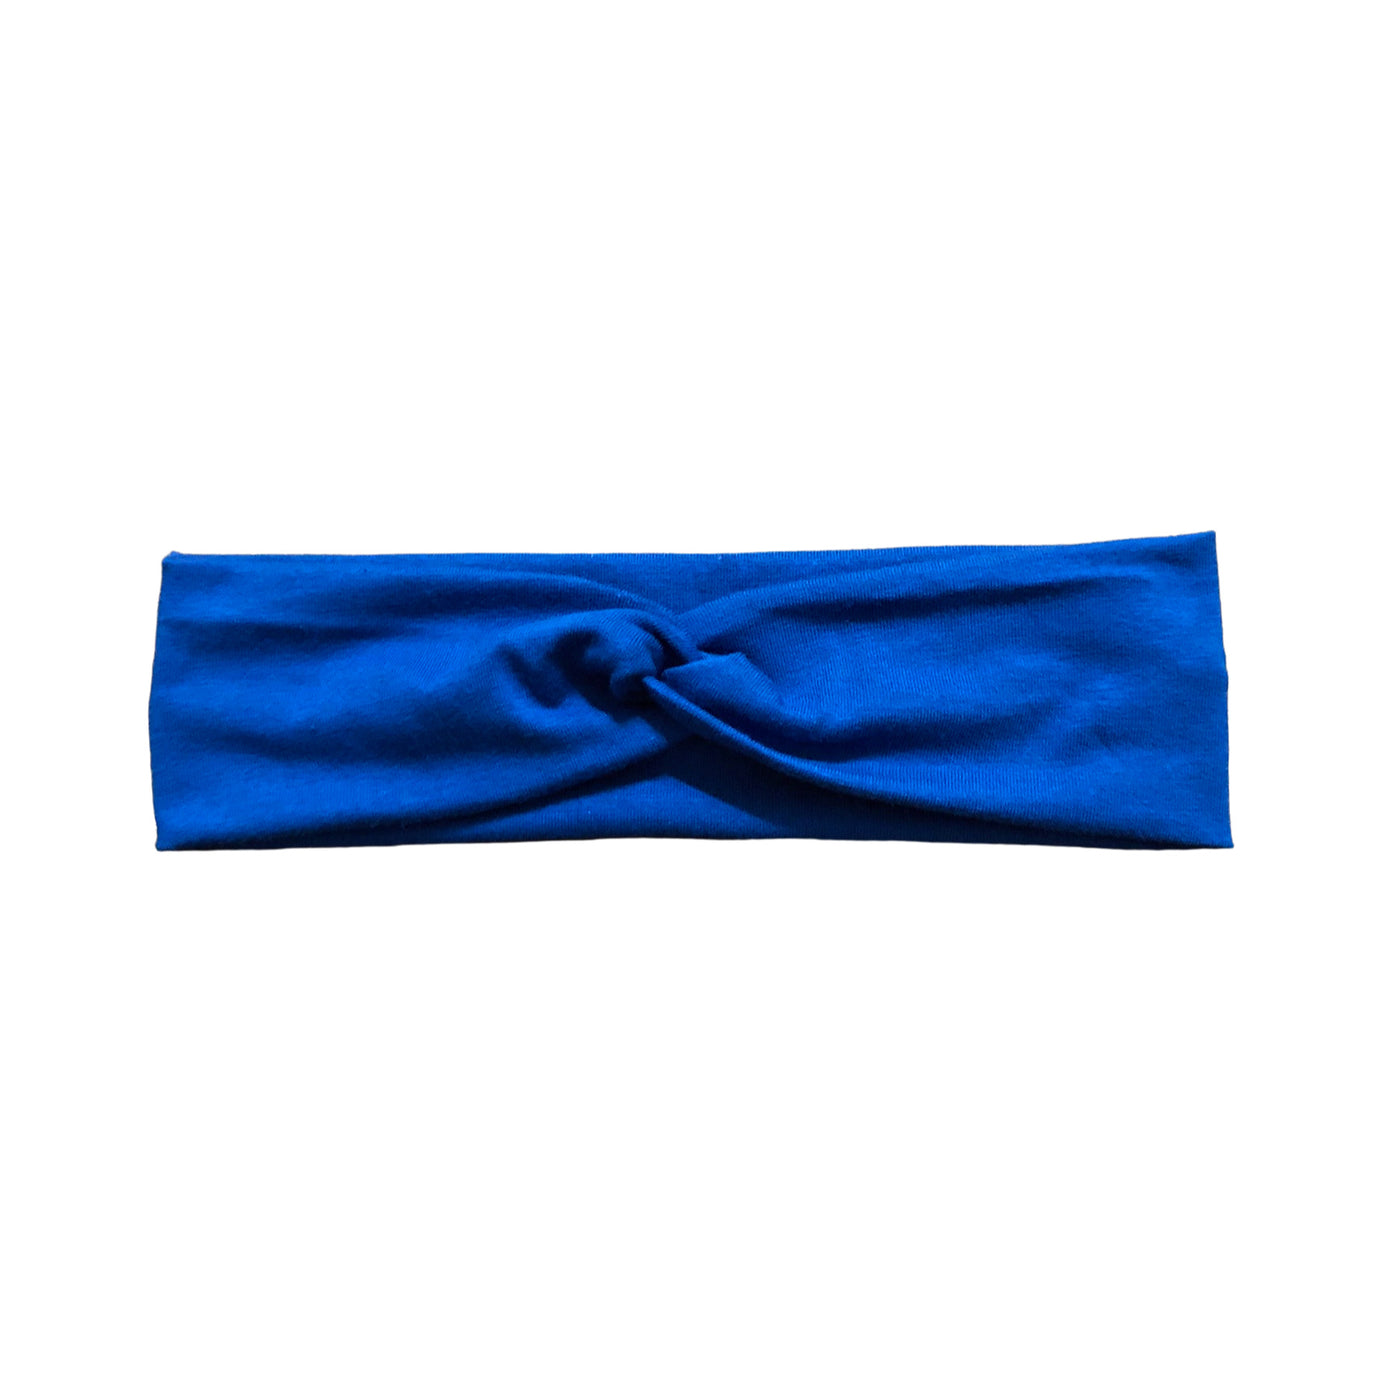 Solid Royal Blue Headband, Cotton Spandex